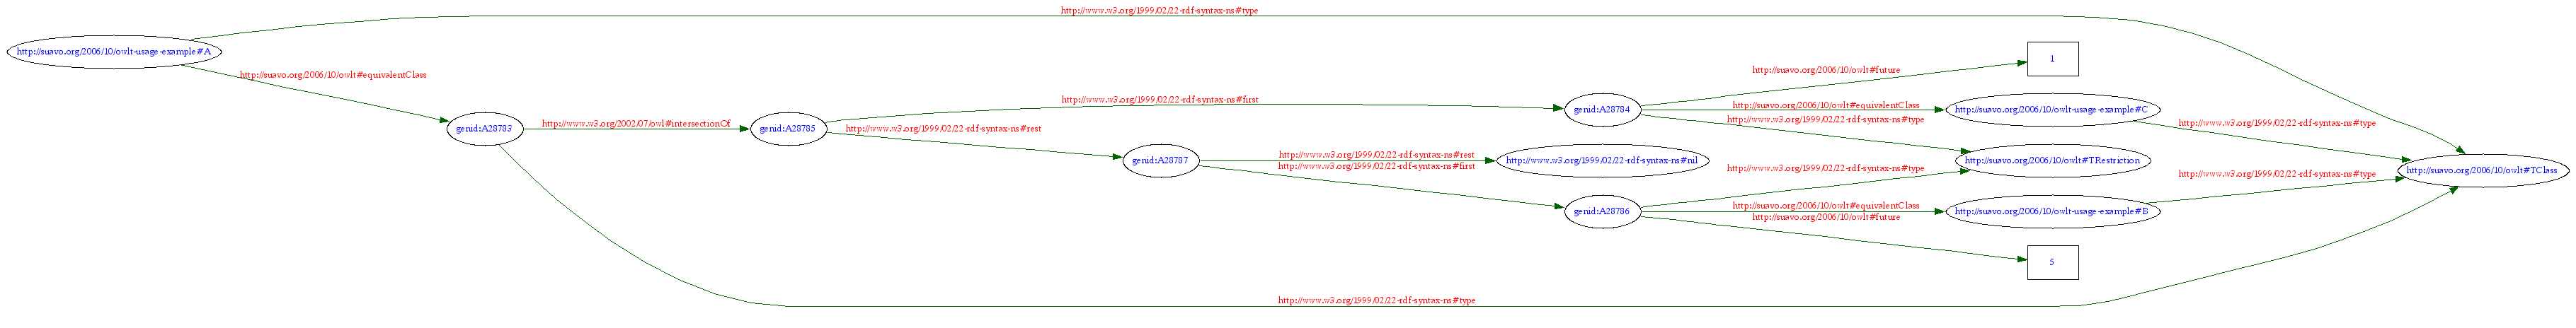 graph representation of RDF data